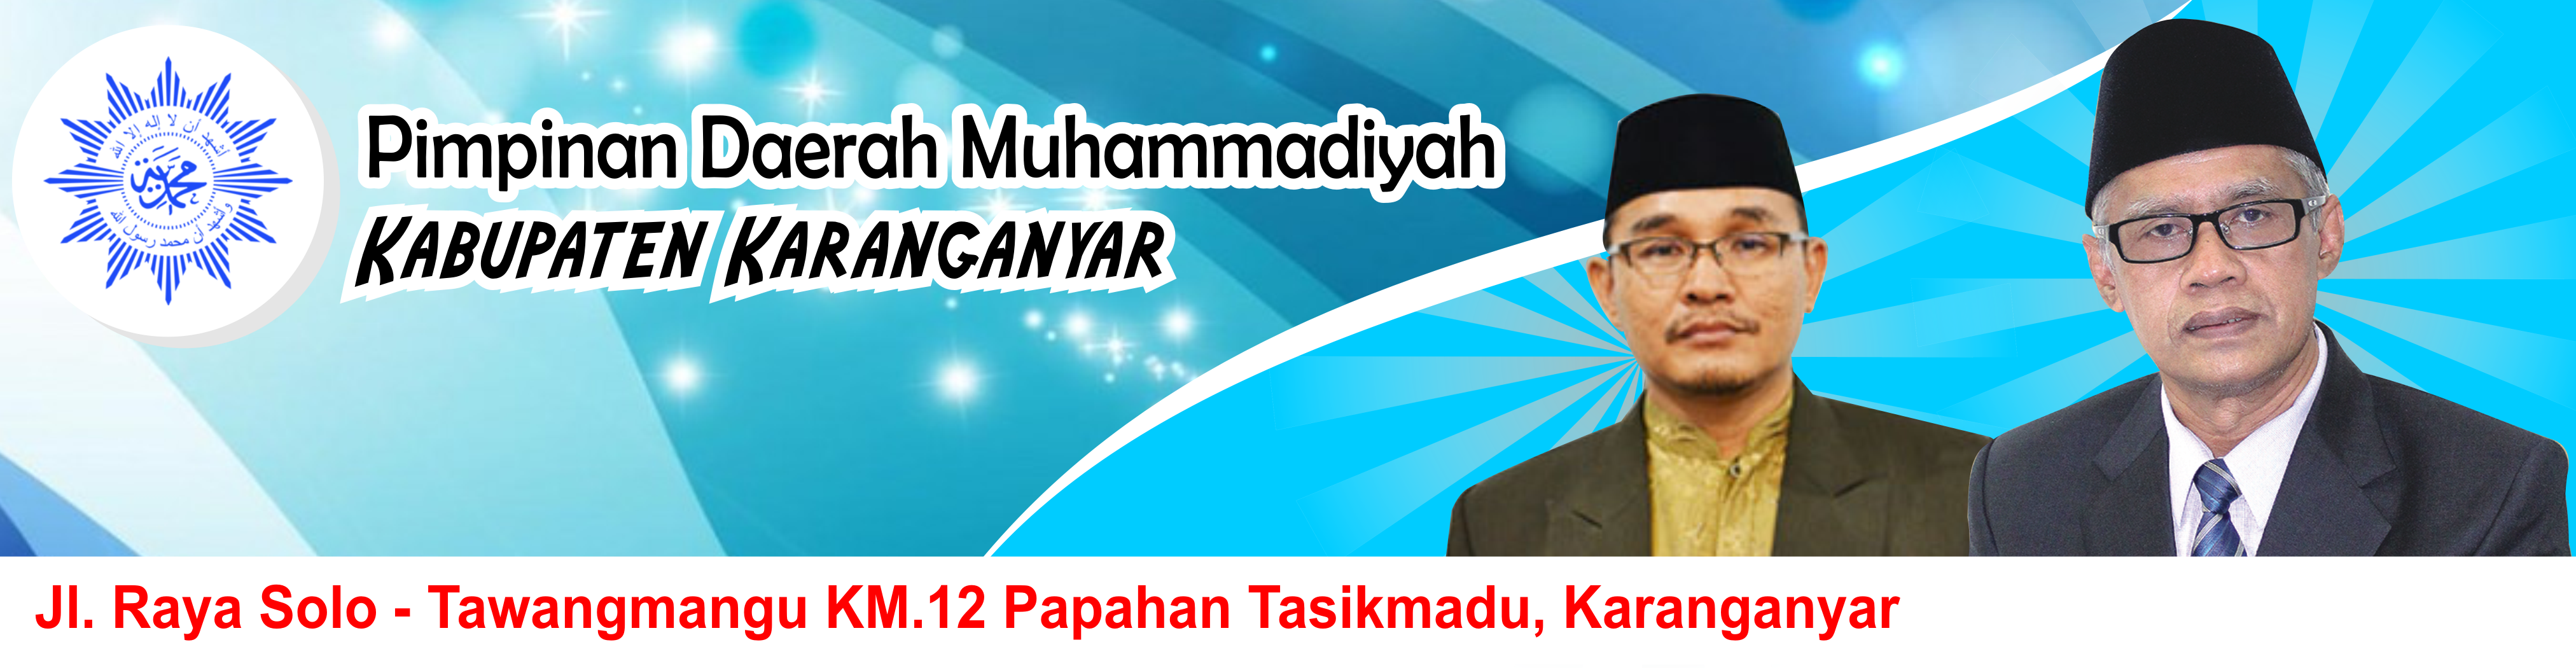 Majelis Hukum dan Hak Asasi Manusia Pimpinan Daerah Muhammadiyah Kabupaten Karanganyar